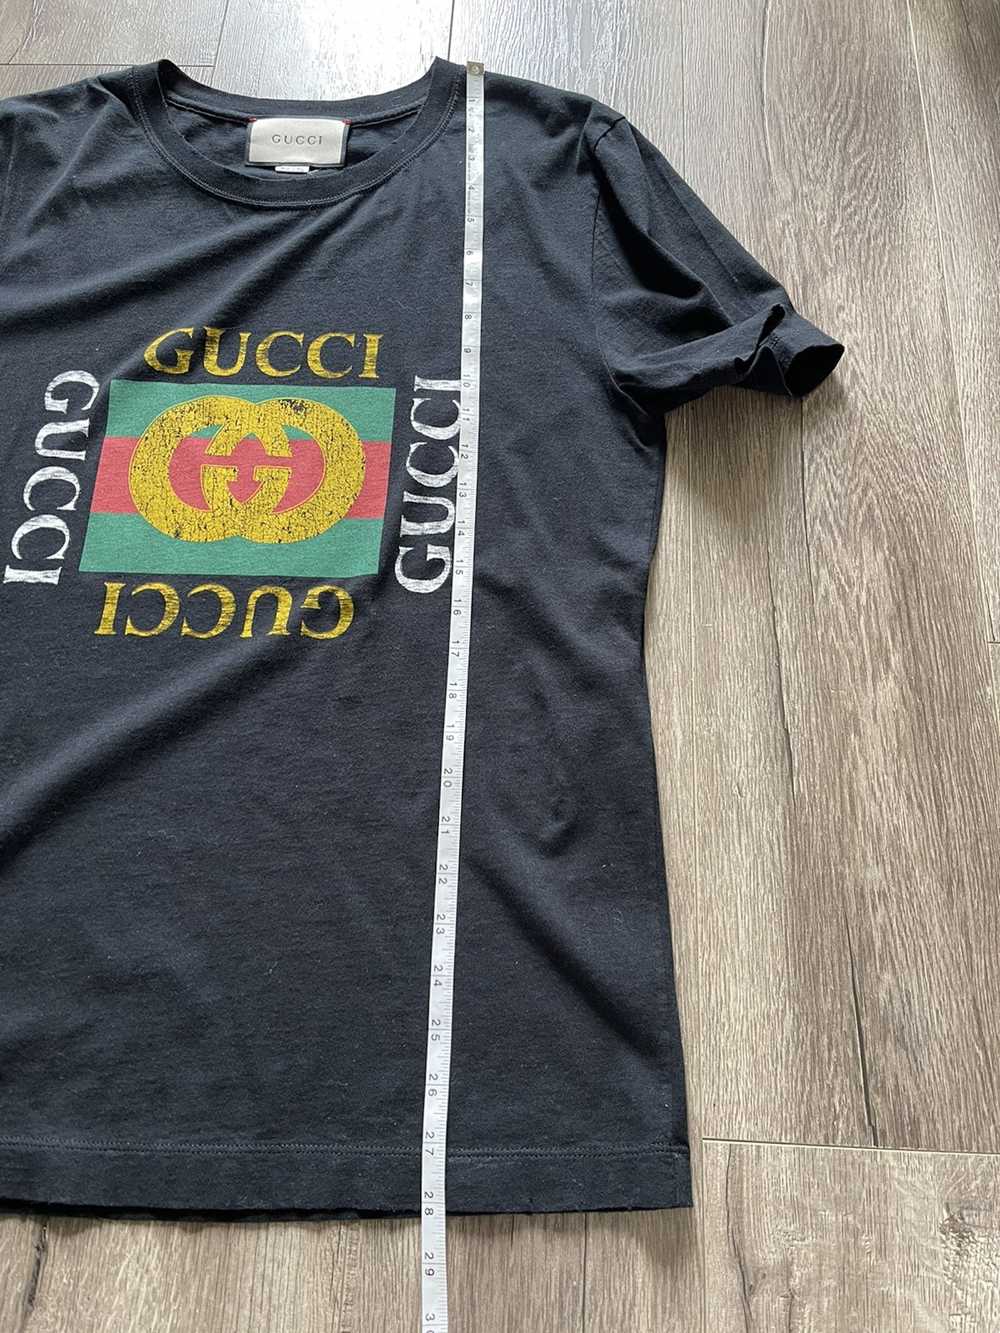 Gucci Gucci - vintage logo black t-shirt - image 7